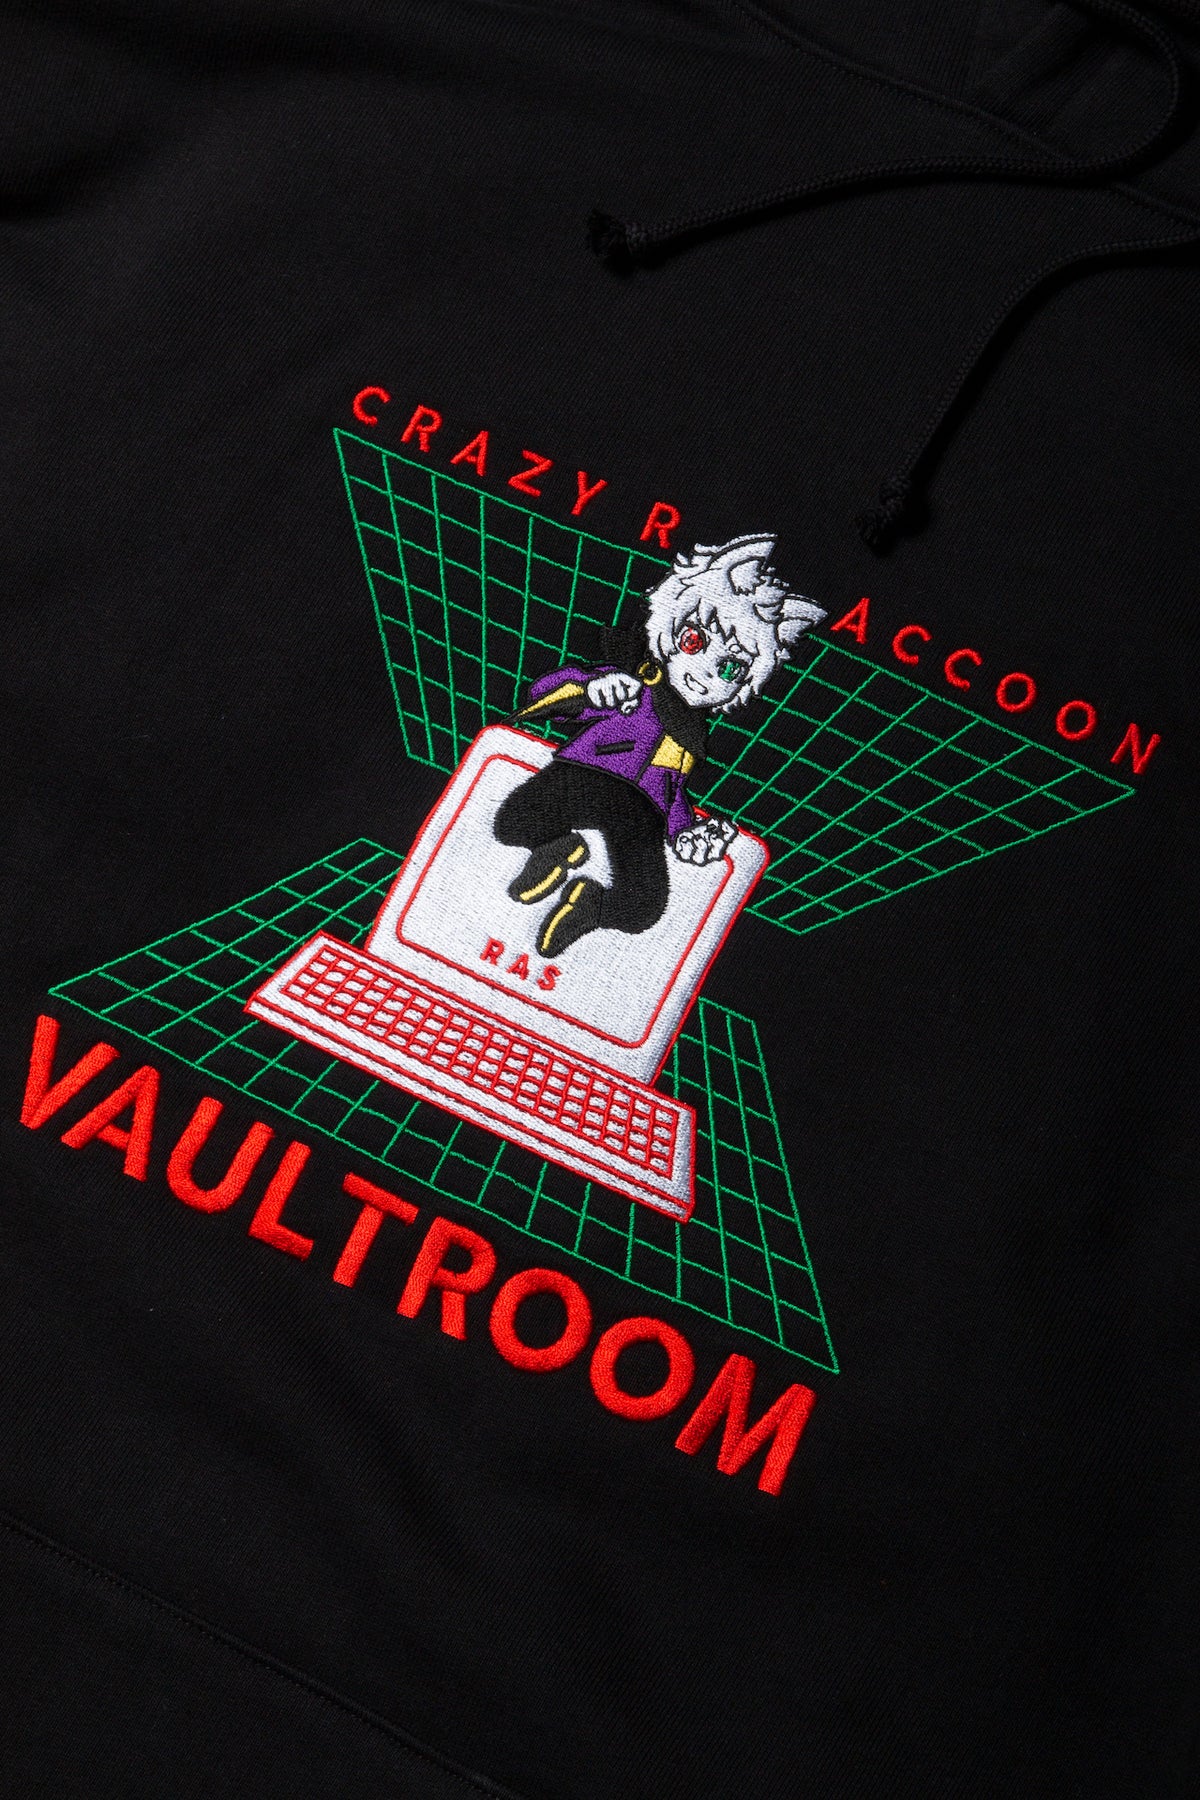 vaultroom × Ras  ブラック Lサイズ